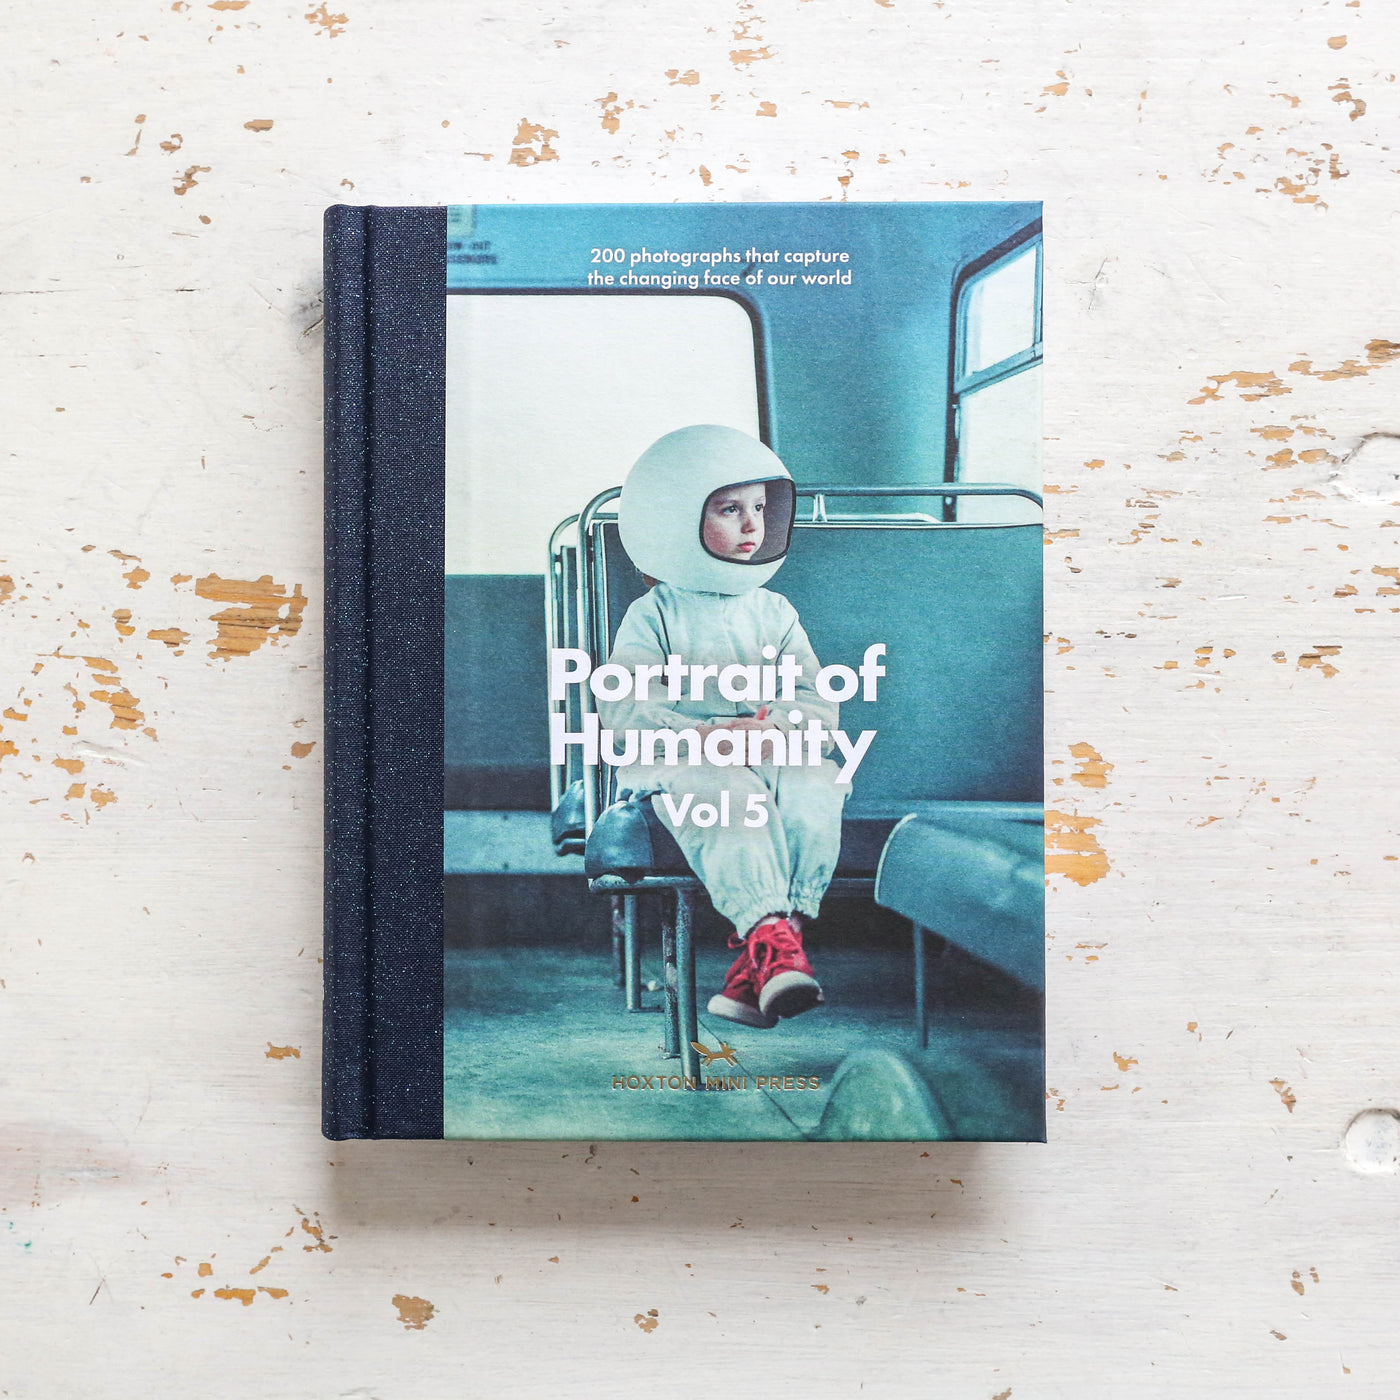 Portrait of Humanity Vol 5 - Hoxton Mini Press Book